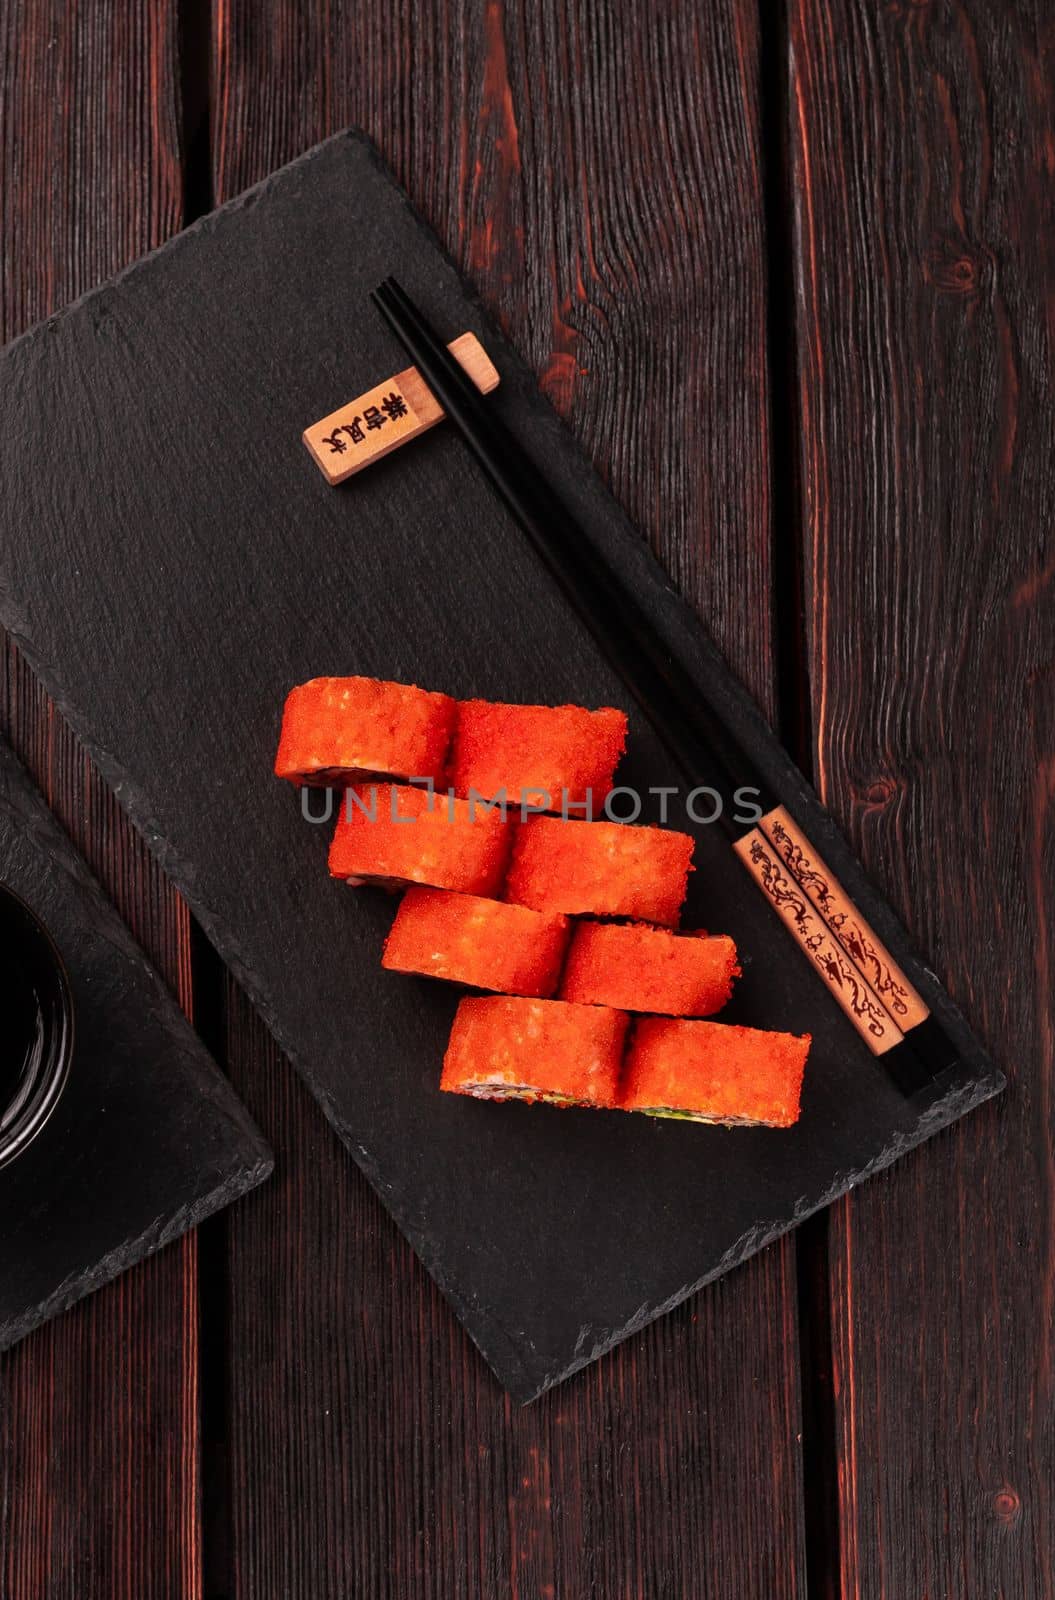 Roll wish fish sushi with chopsticks